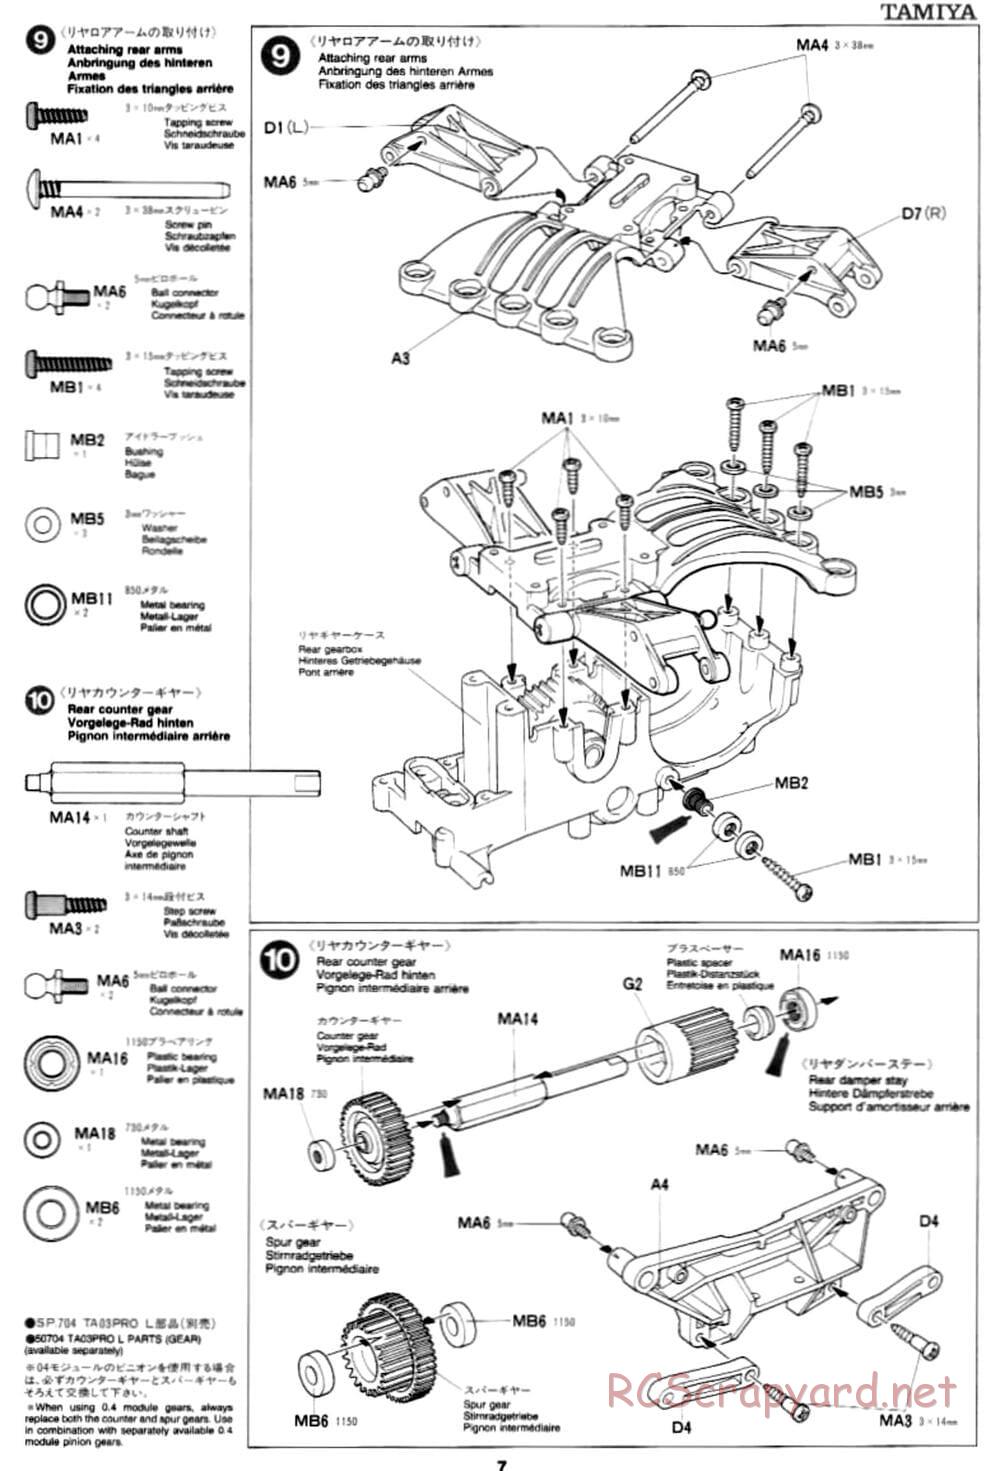 Tamiya - Mercedes CLK-GTR - TA-03R Chassis - Manual - Page 7